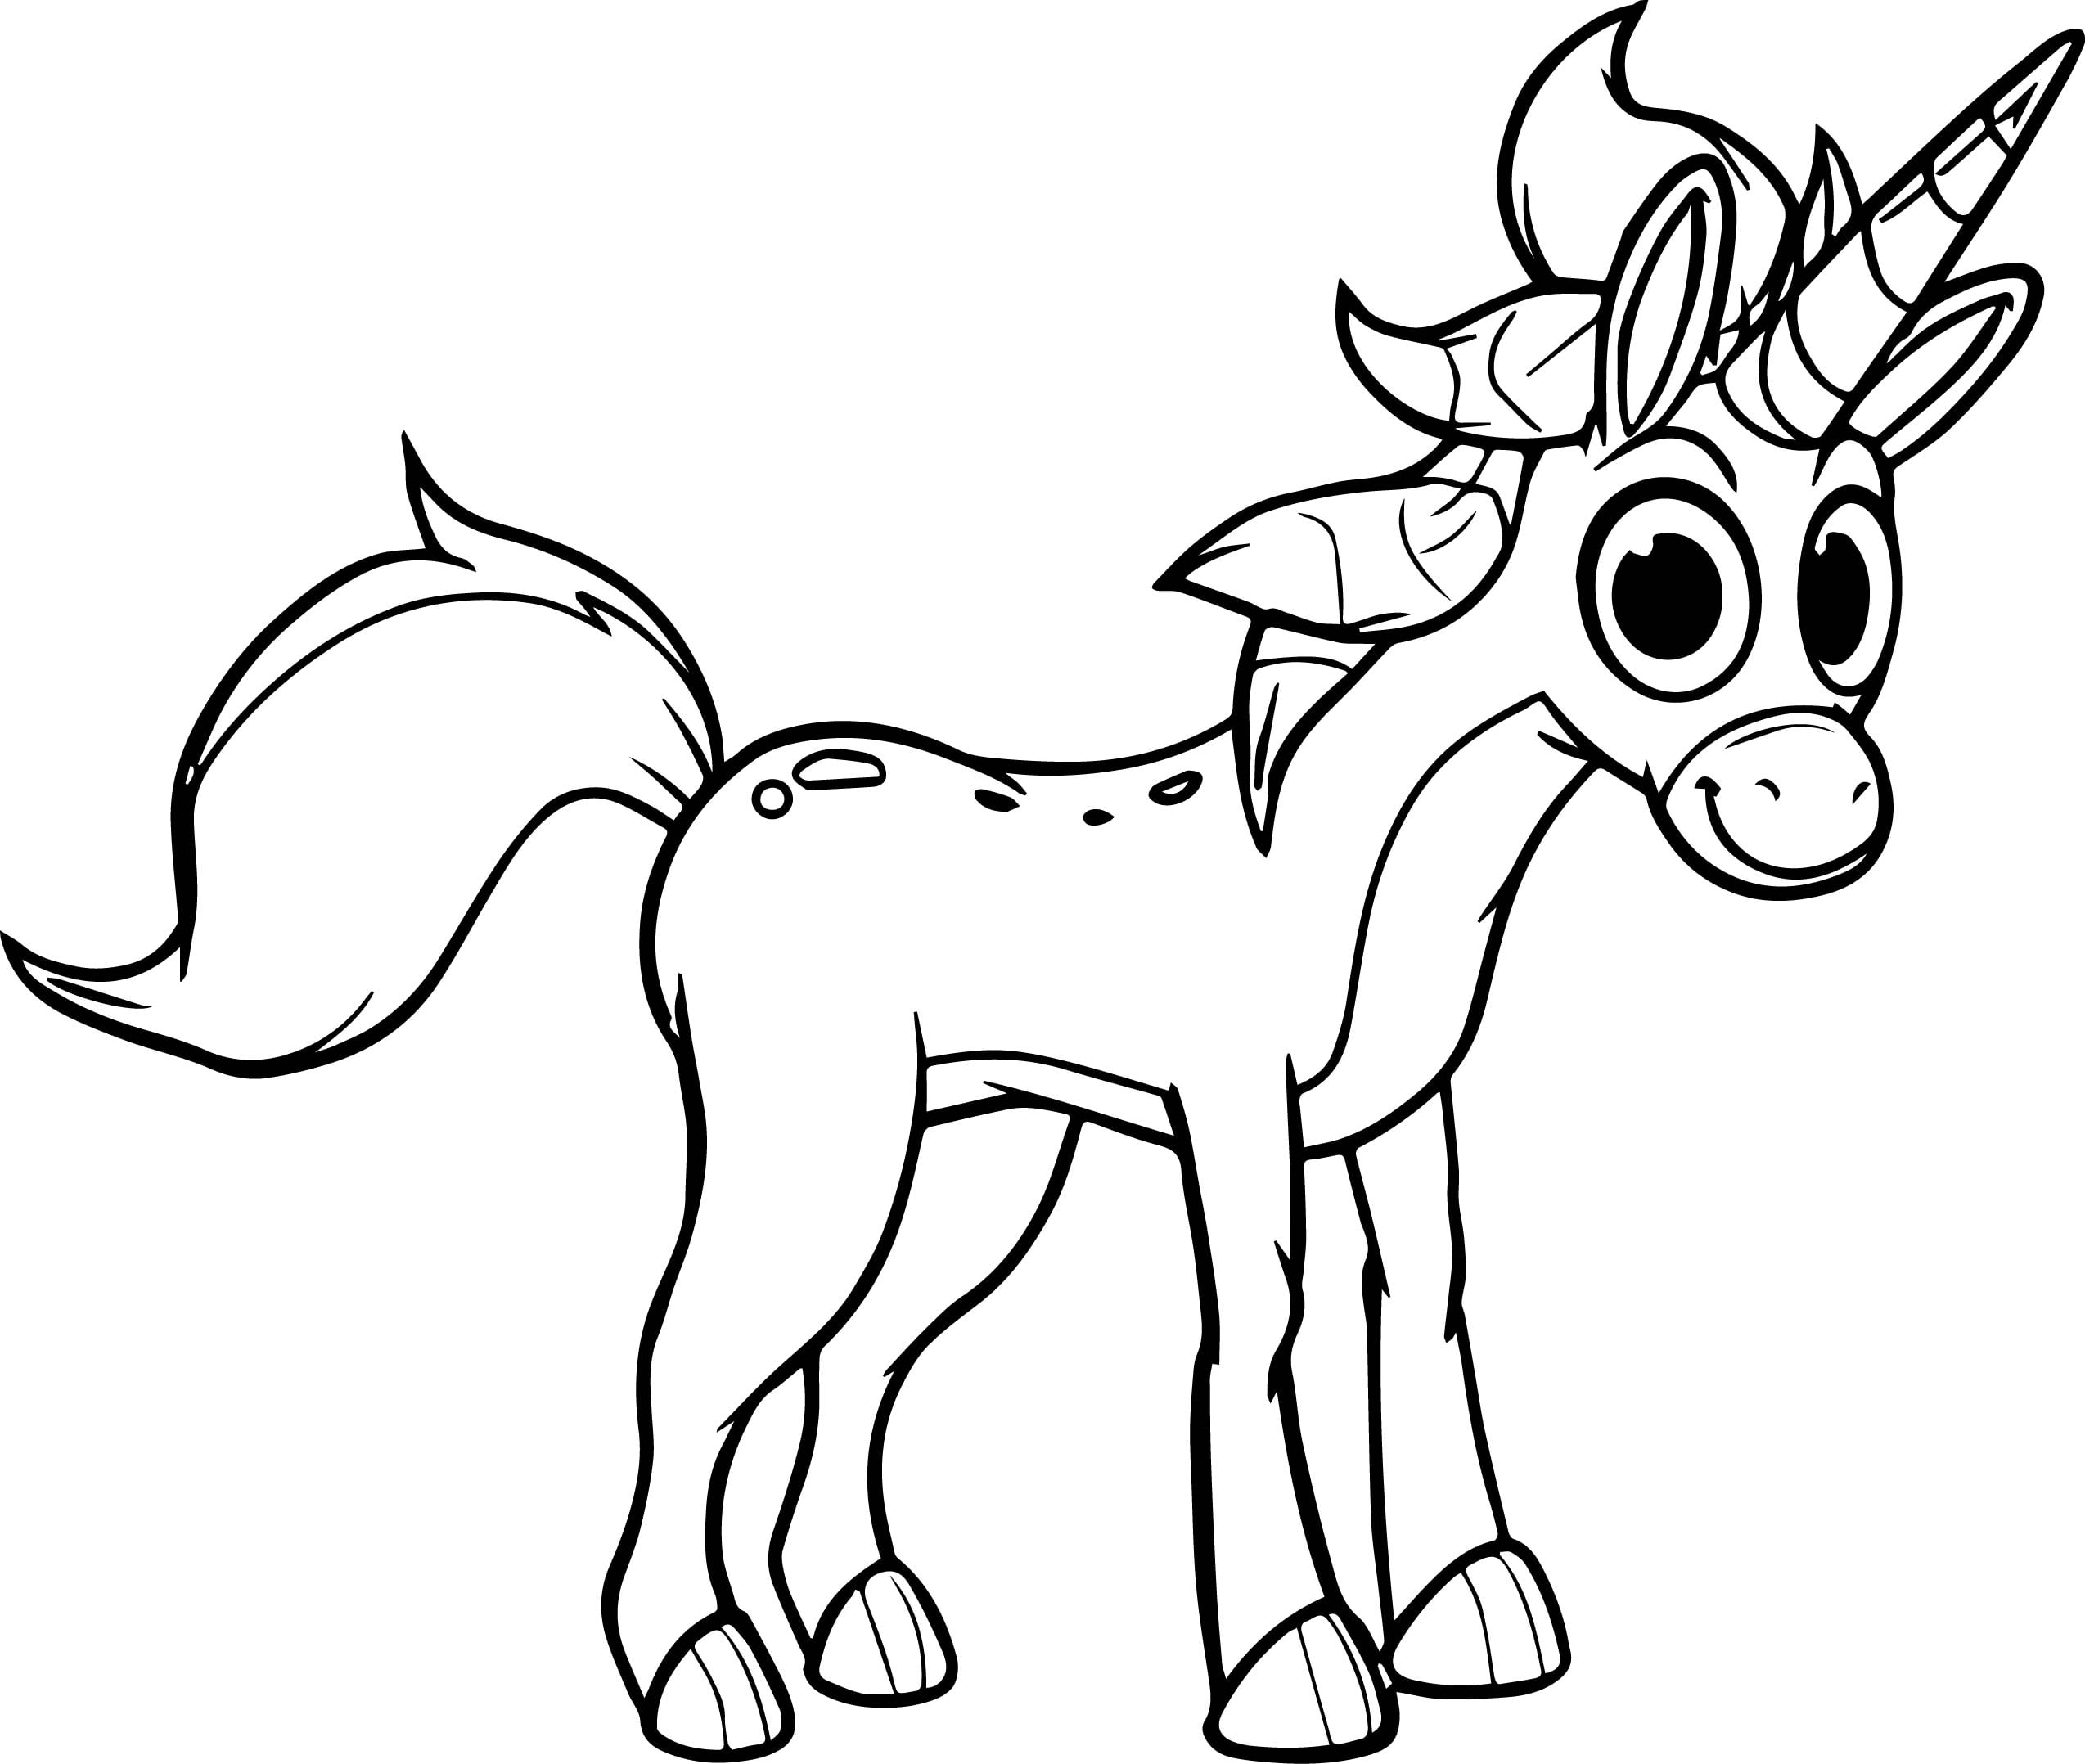 Morphle Cartoon My Cute Unicorn Coloring Page | Wecoloringpage.com